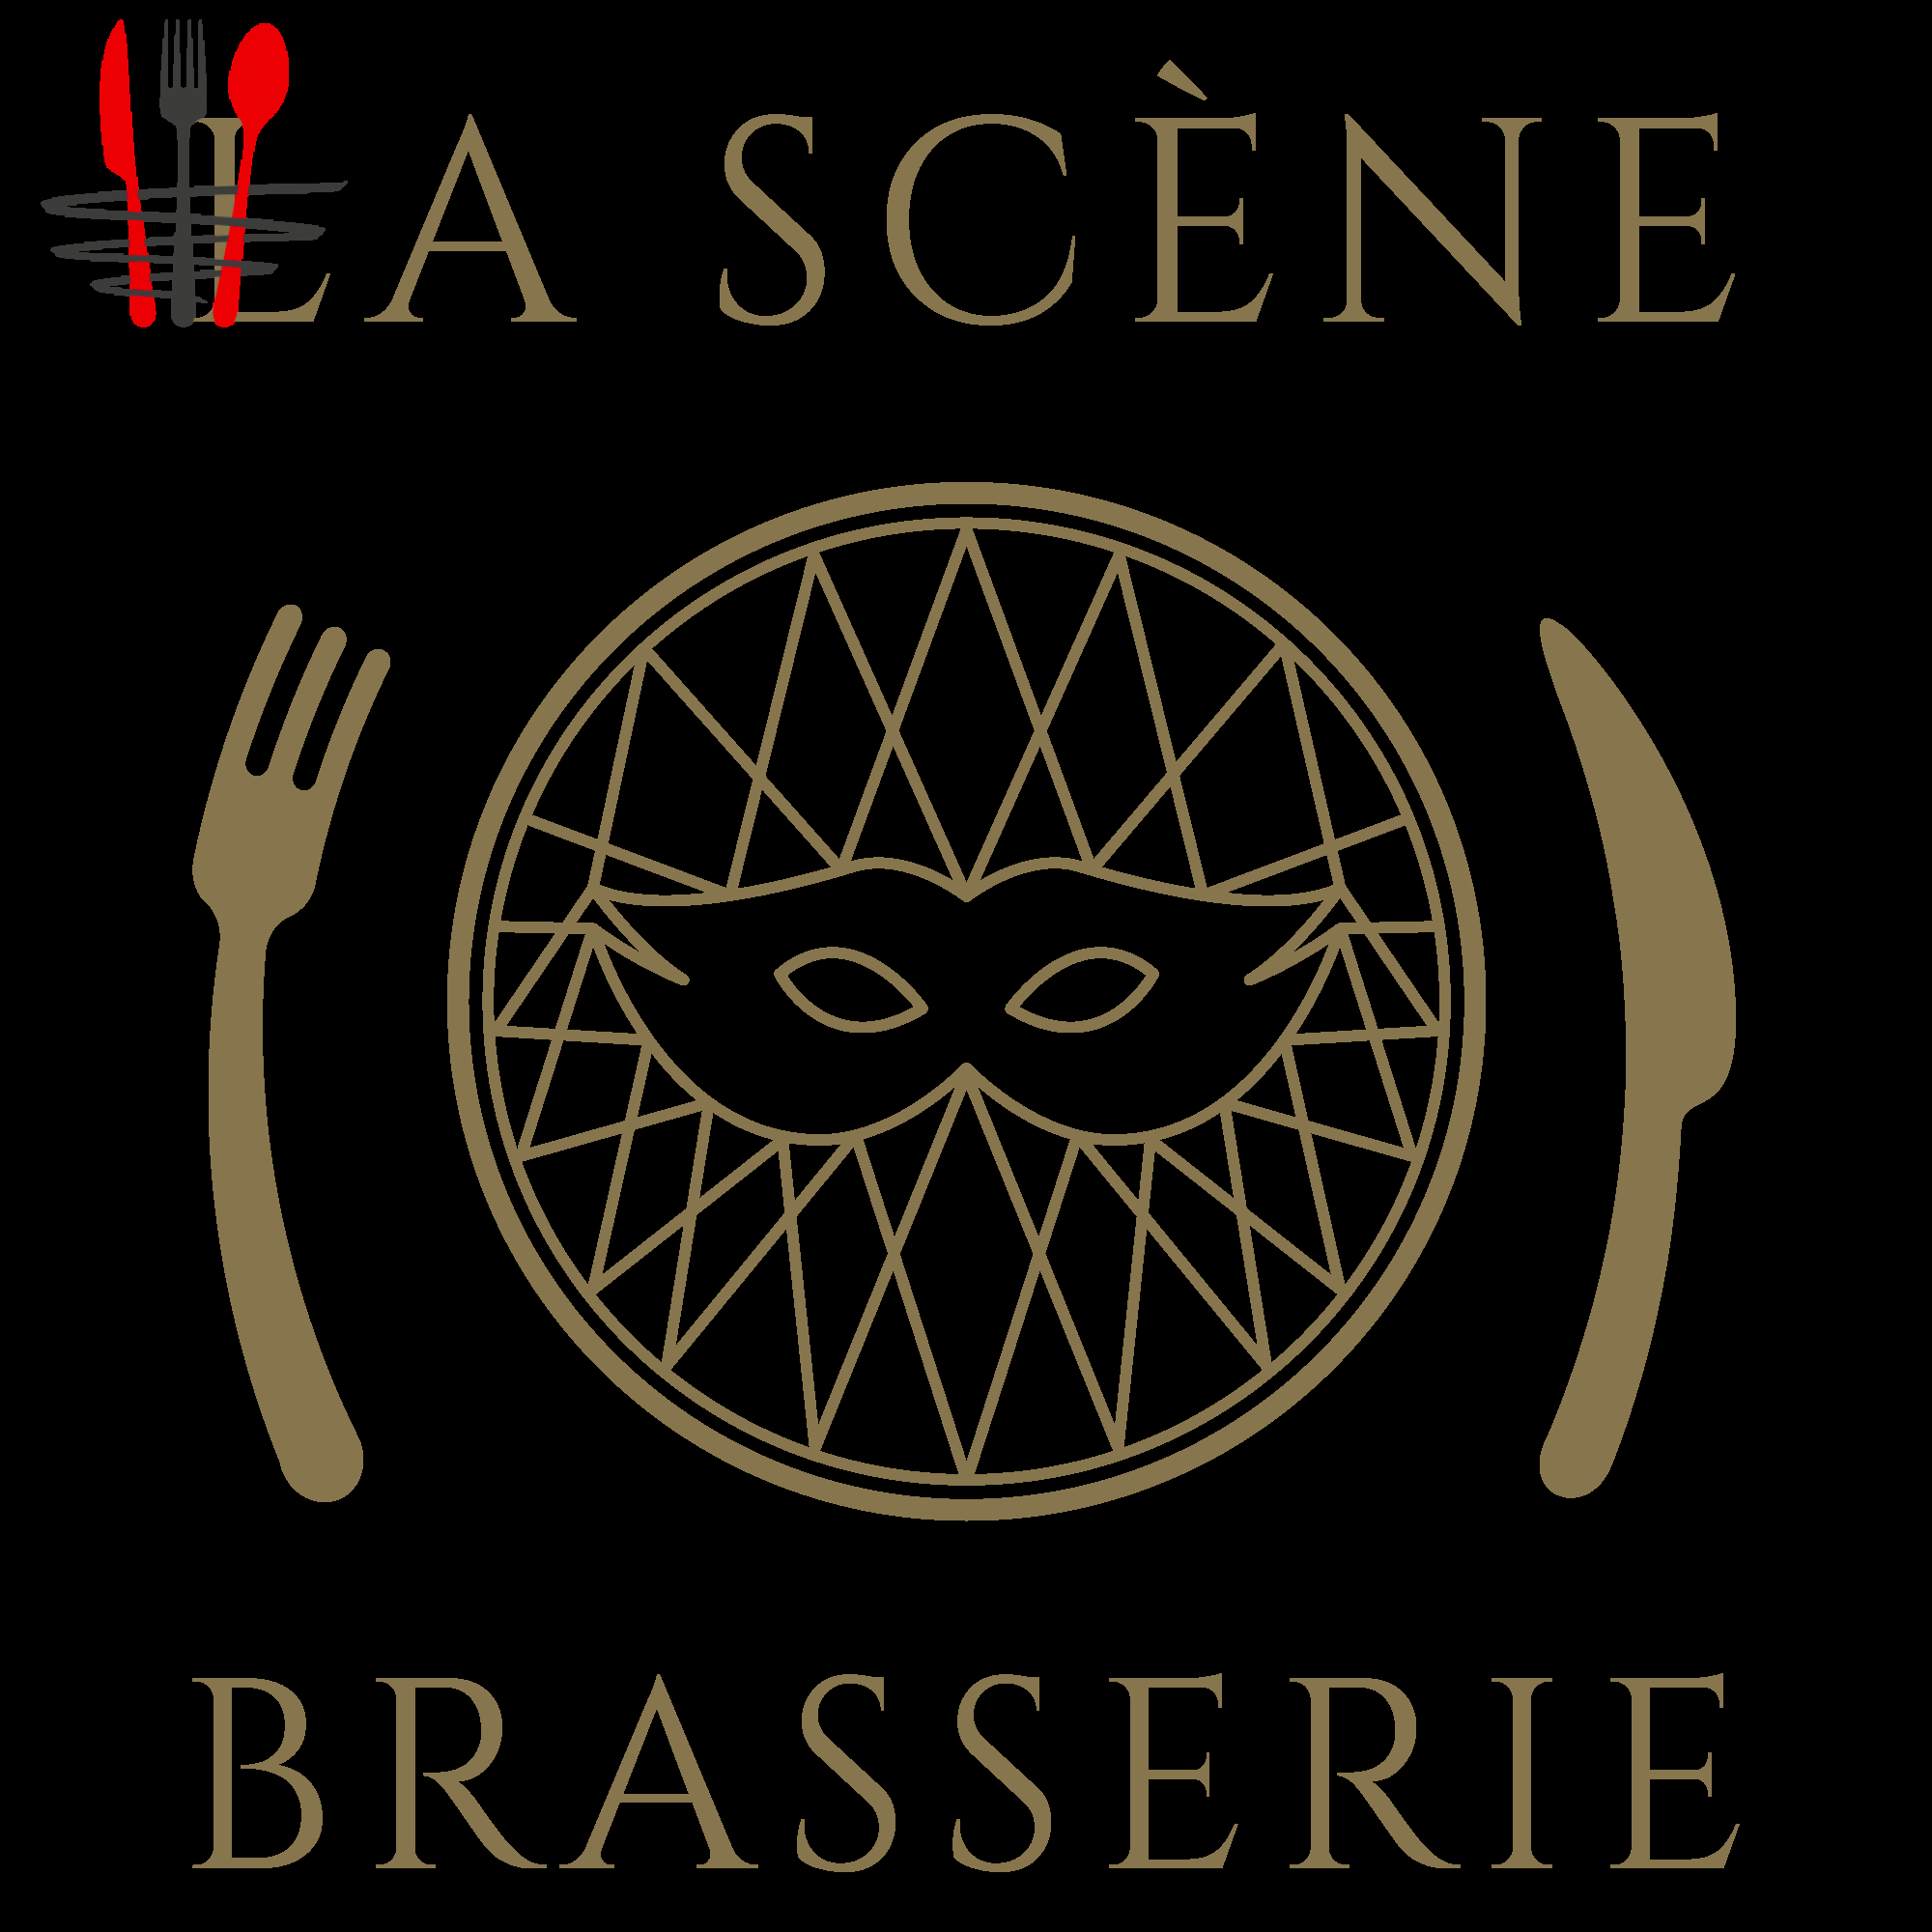 Offre d'emploi La Scène Brasserie - Chef de Cuisine H/F